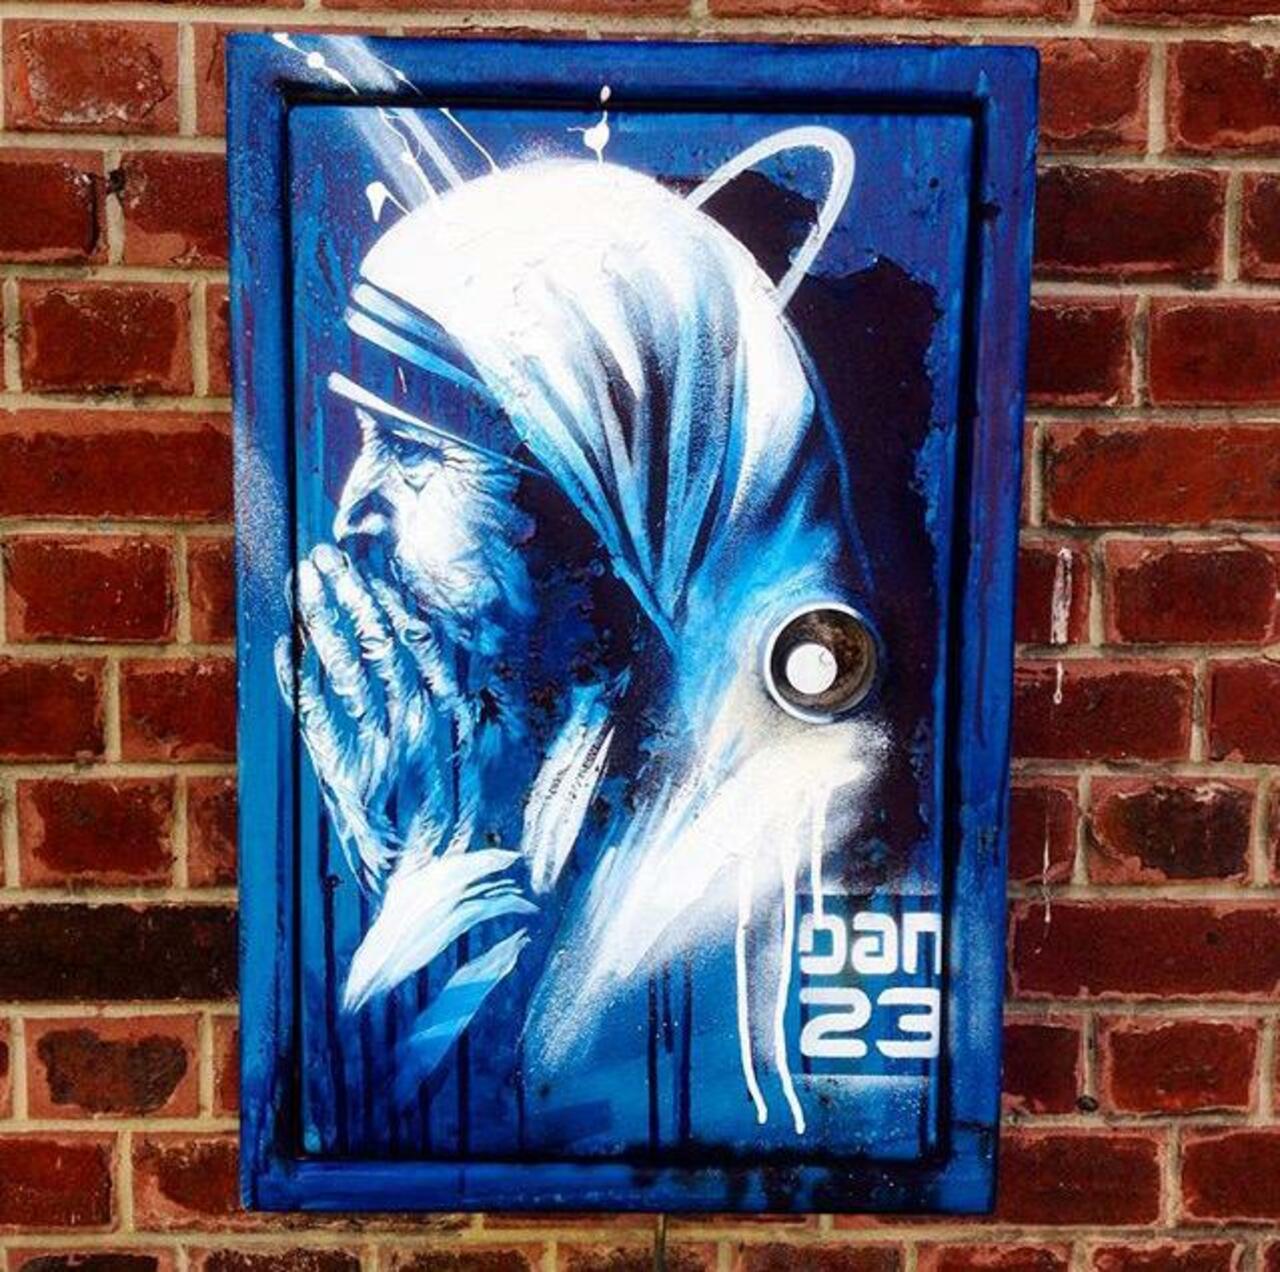 RT @GoogleStreetArt: New Street Art 'Détail Spirit' by Dan23 

#art #graffiti #mural #streetart http://t.co/5yc2XjnQoL